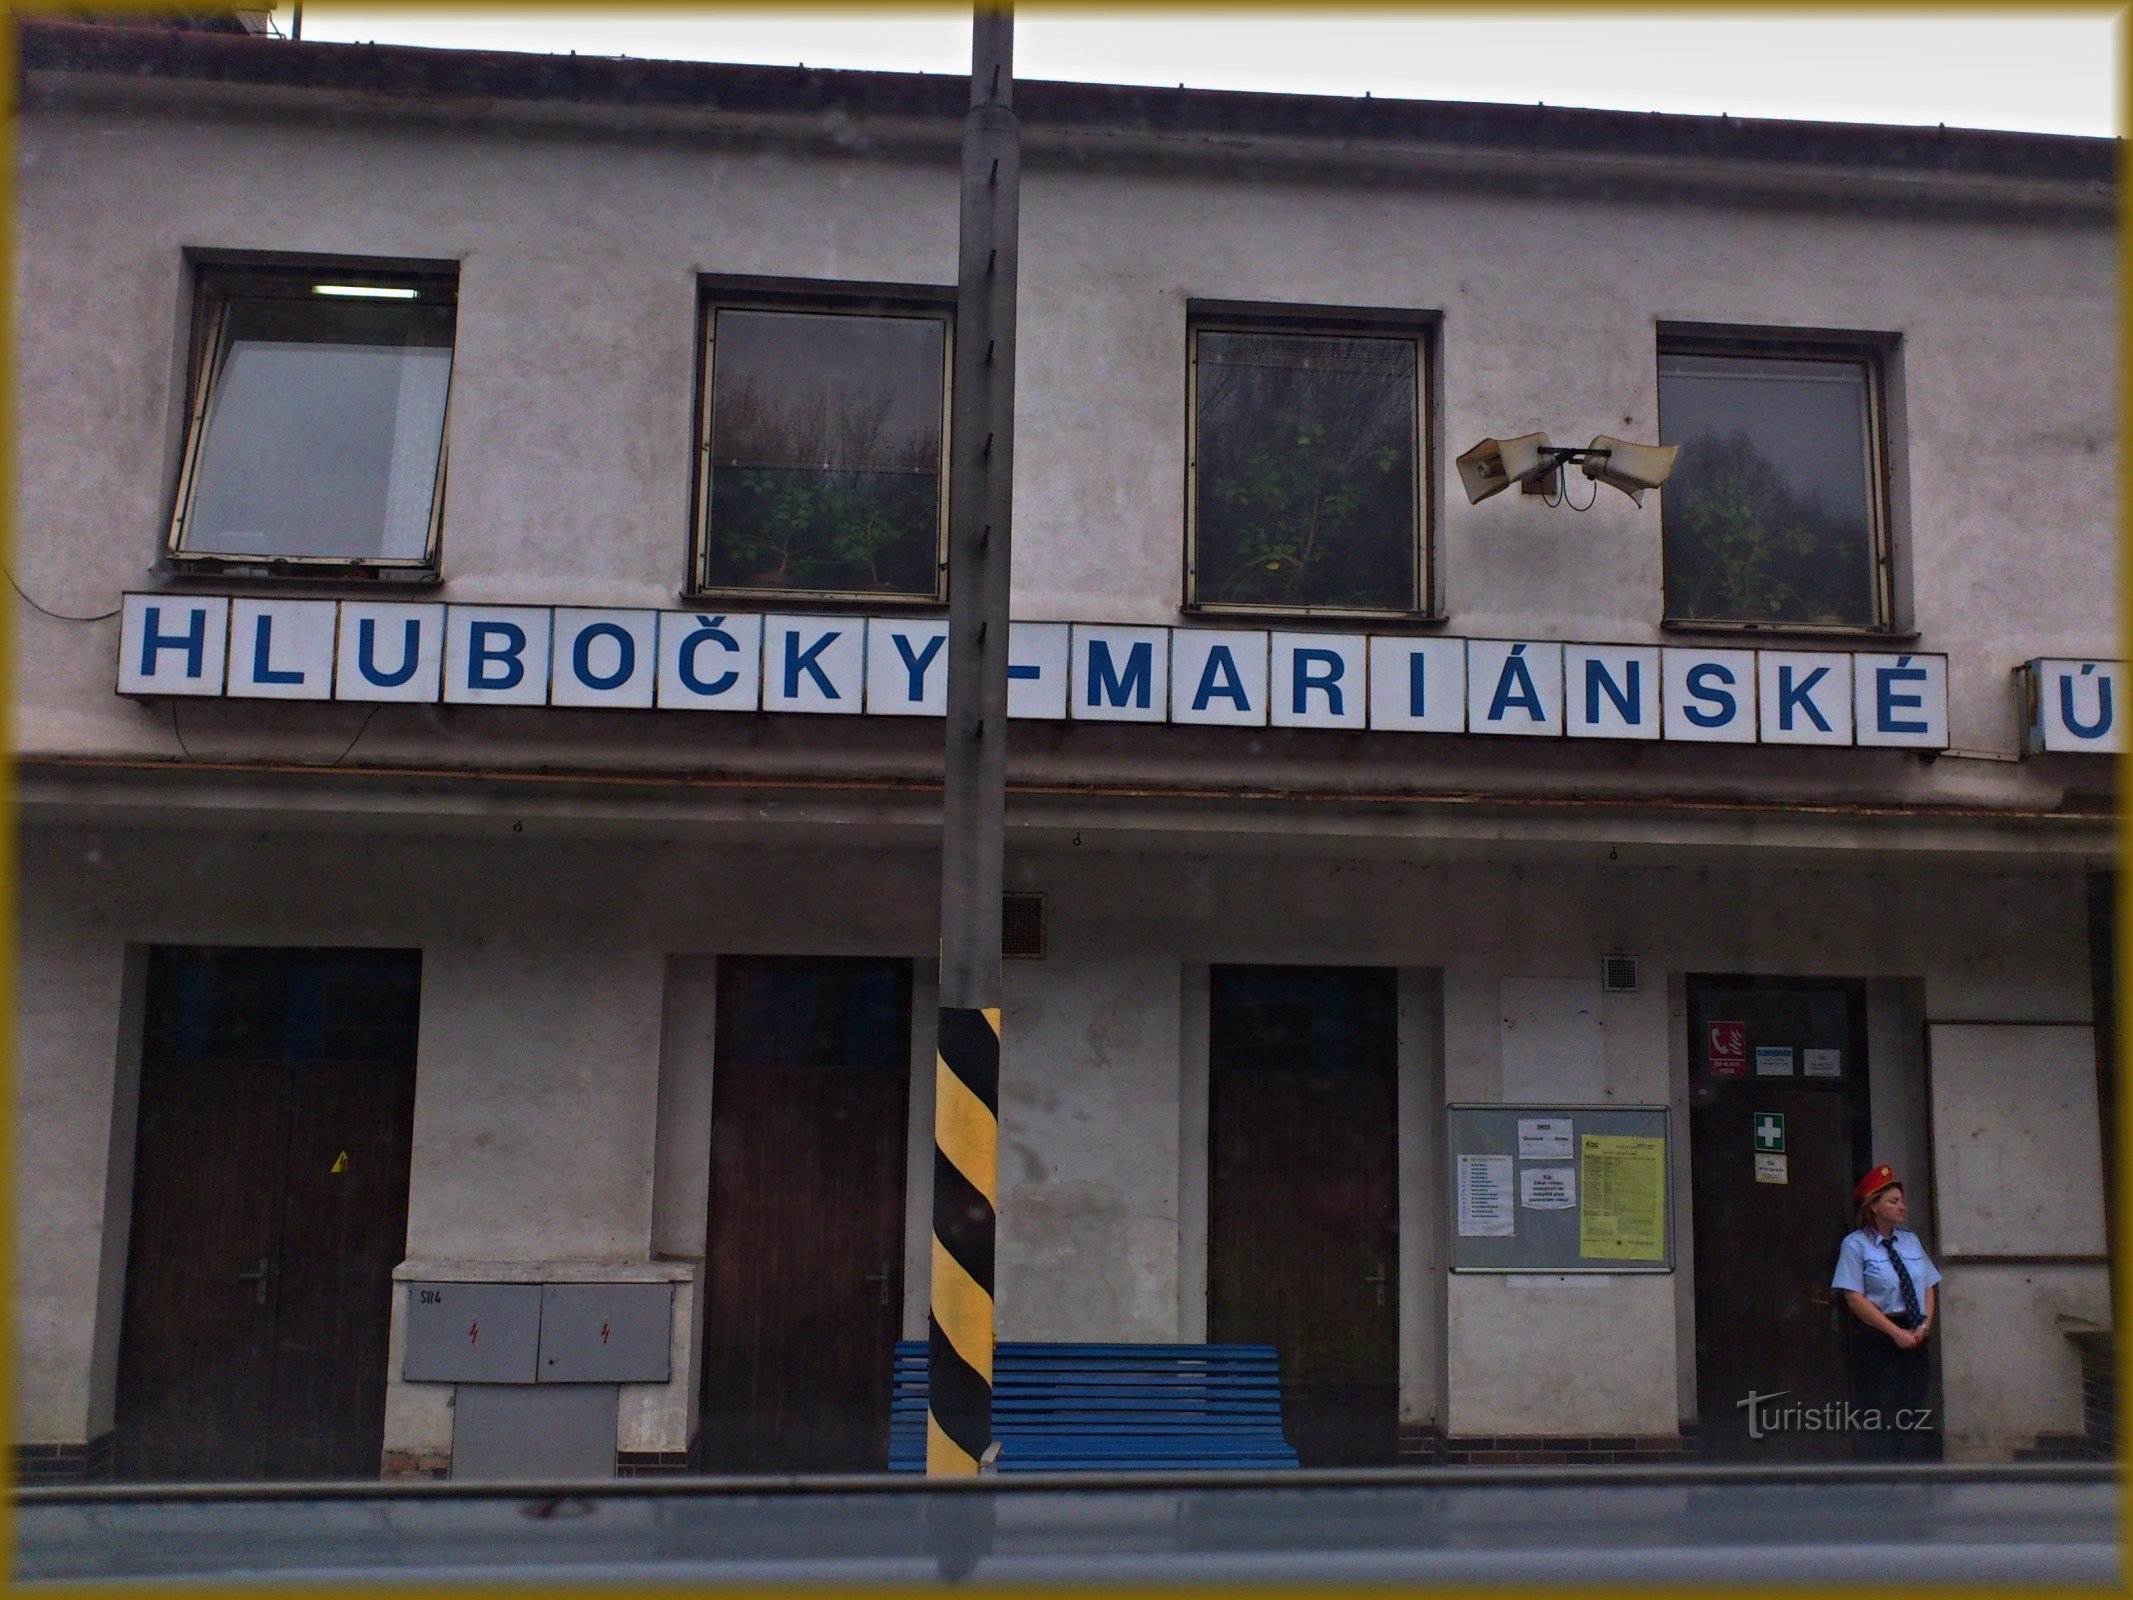 Hlubočky-Marianske Valley - 鉄道駅